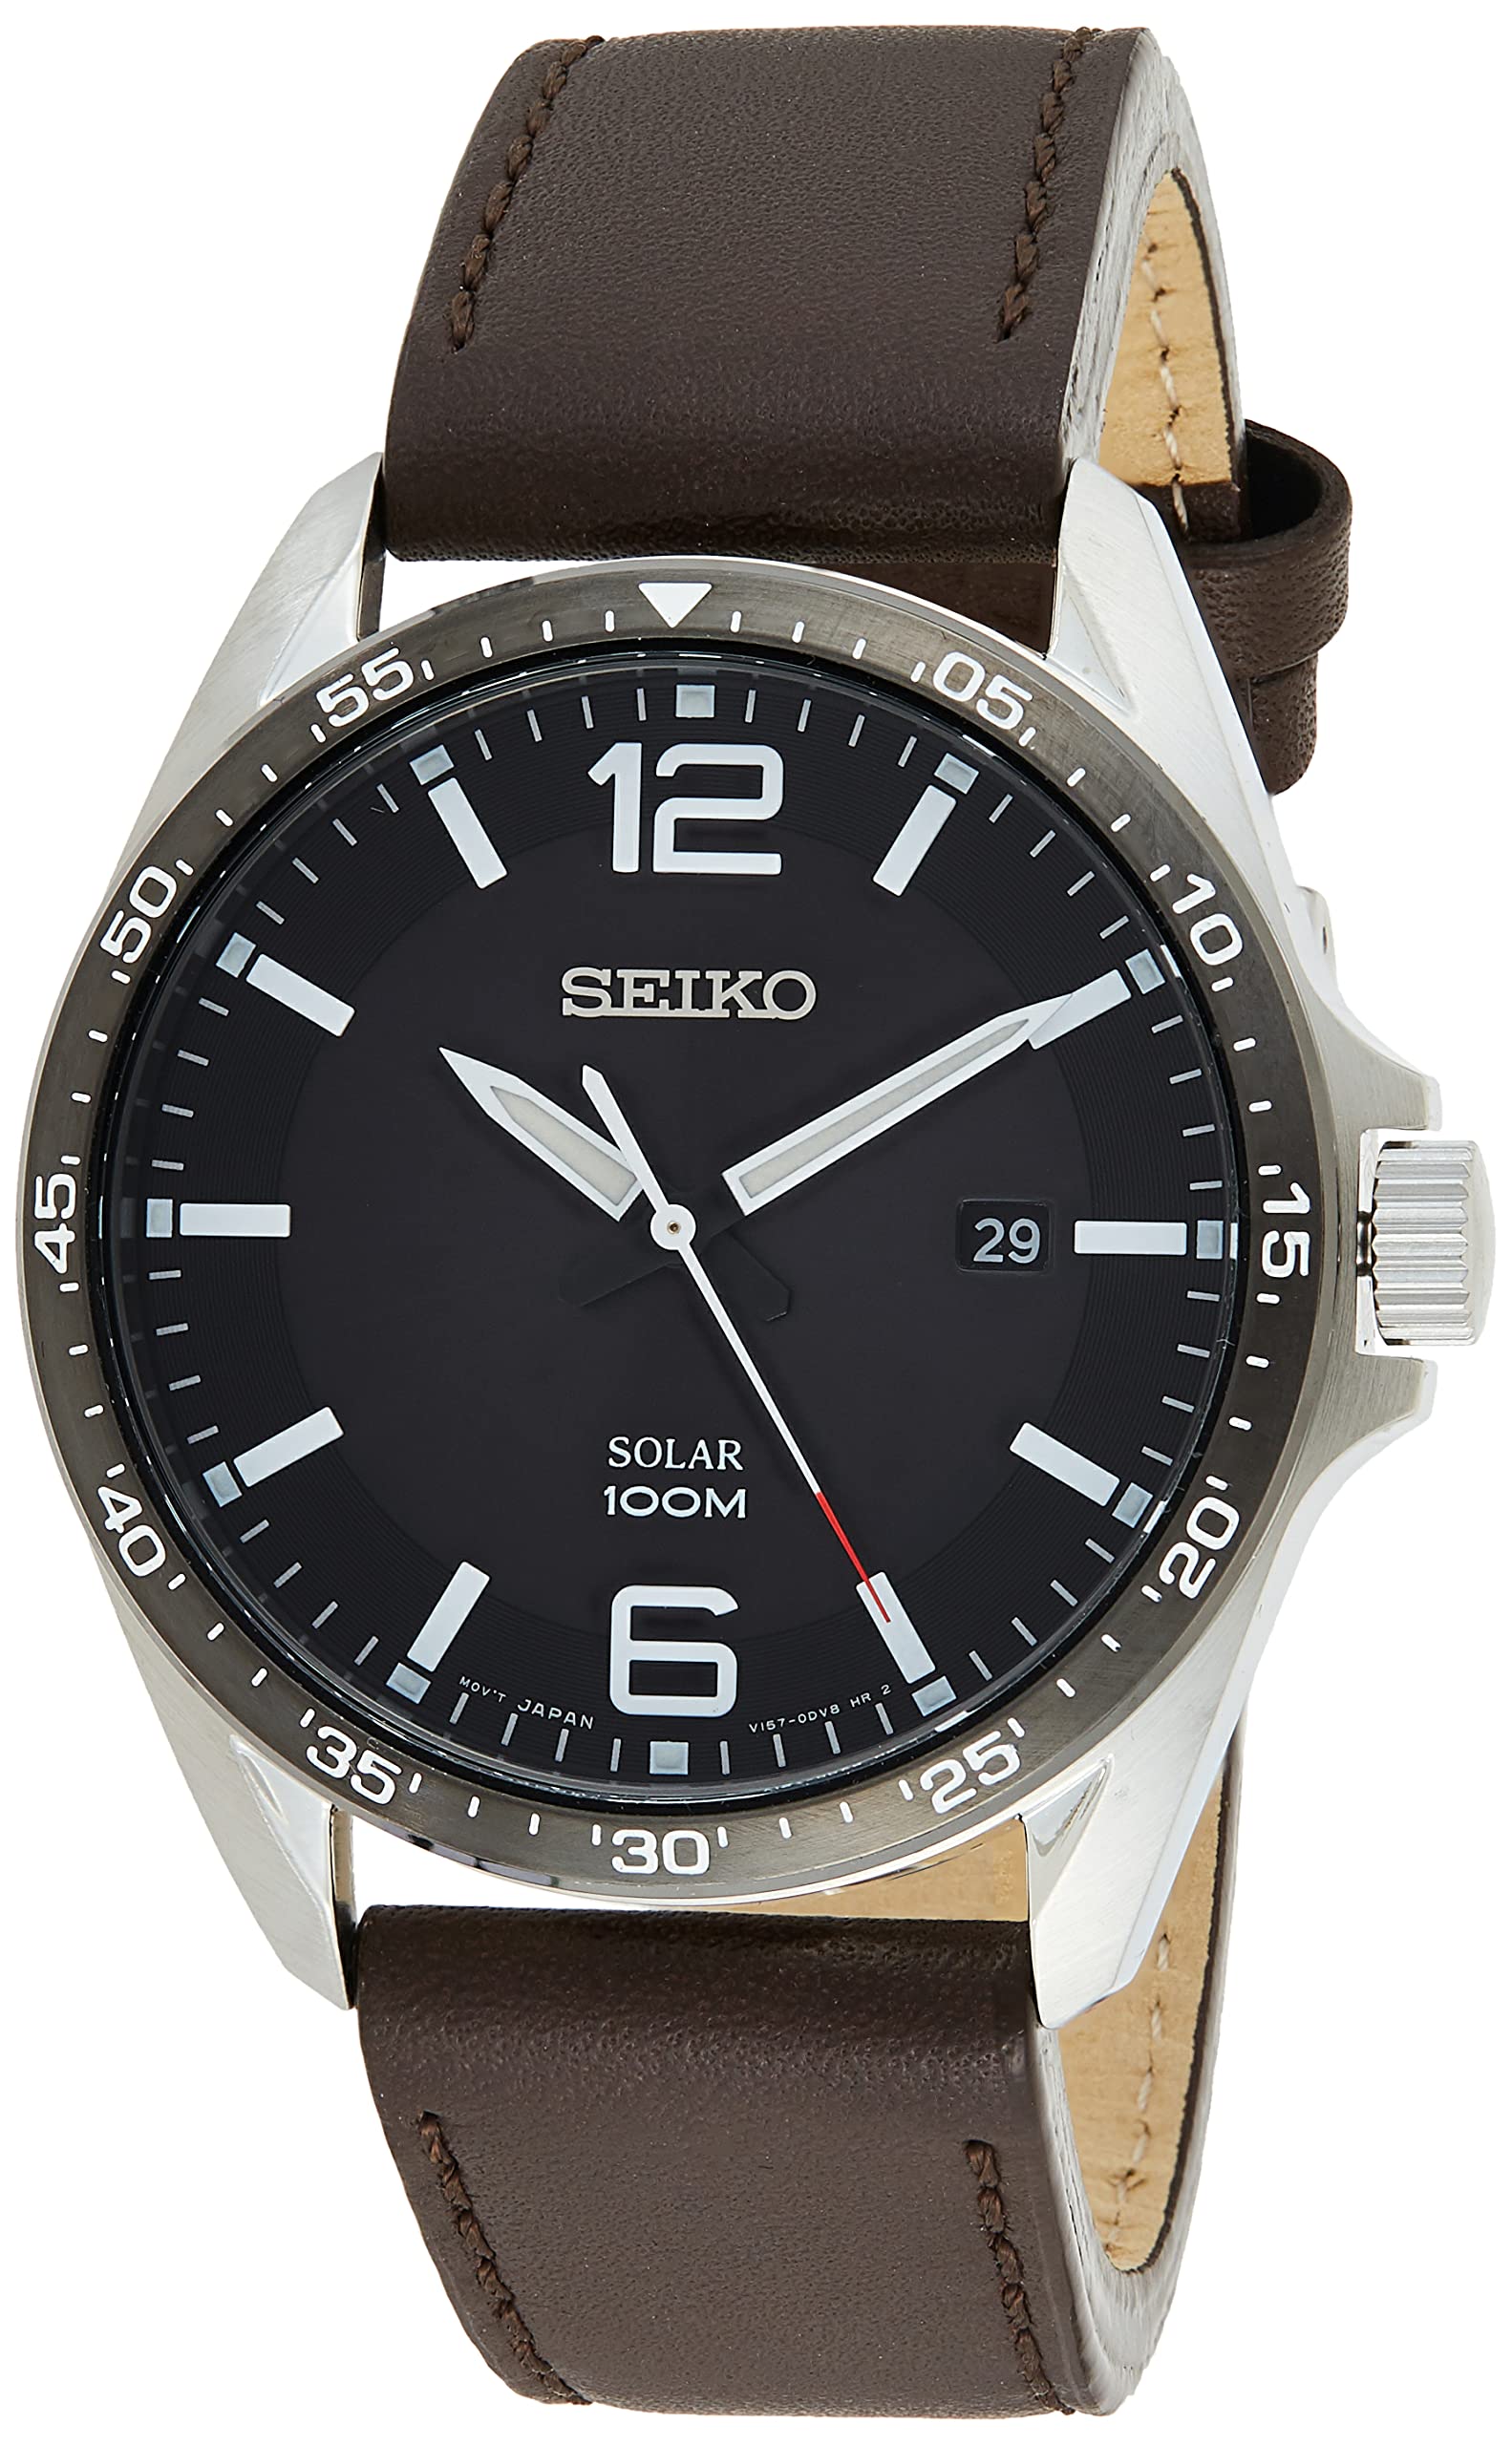 SEIKO Men's SNE487 Sport Watches Analog Display Japanese Quartz Brown Watch